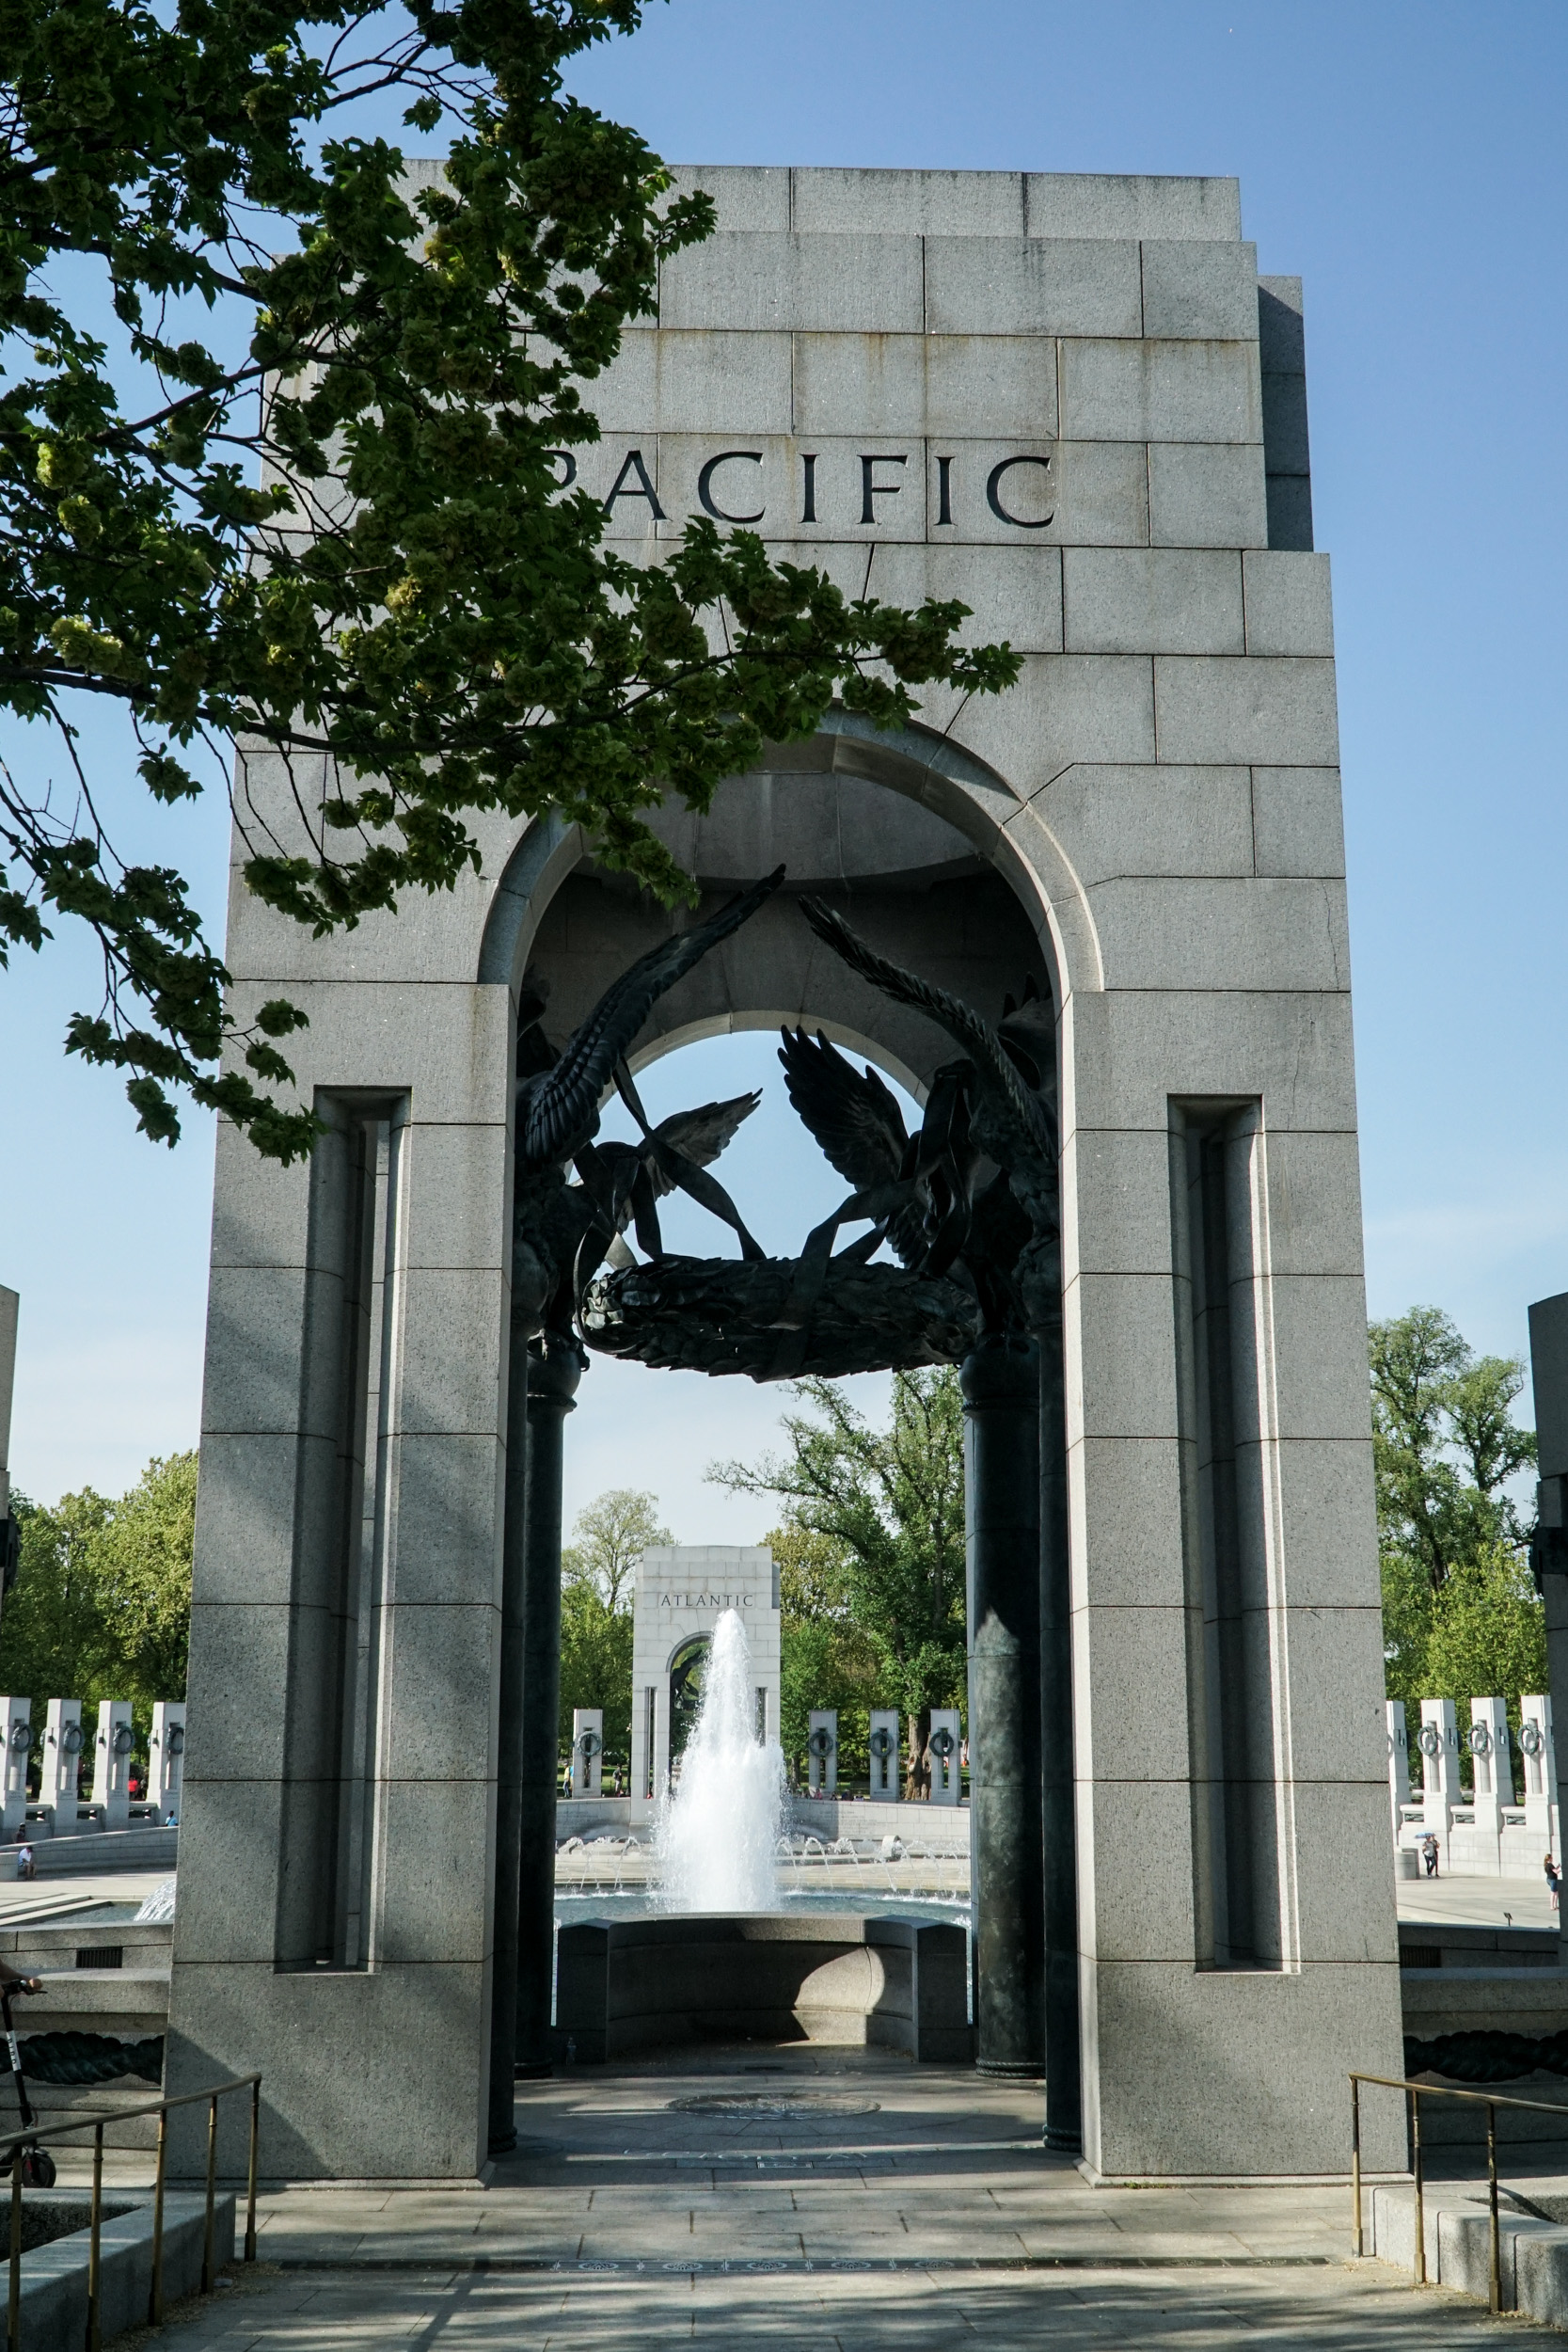 Washington DC World War II Memorial